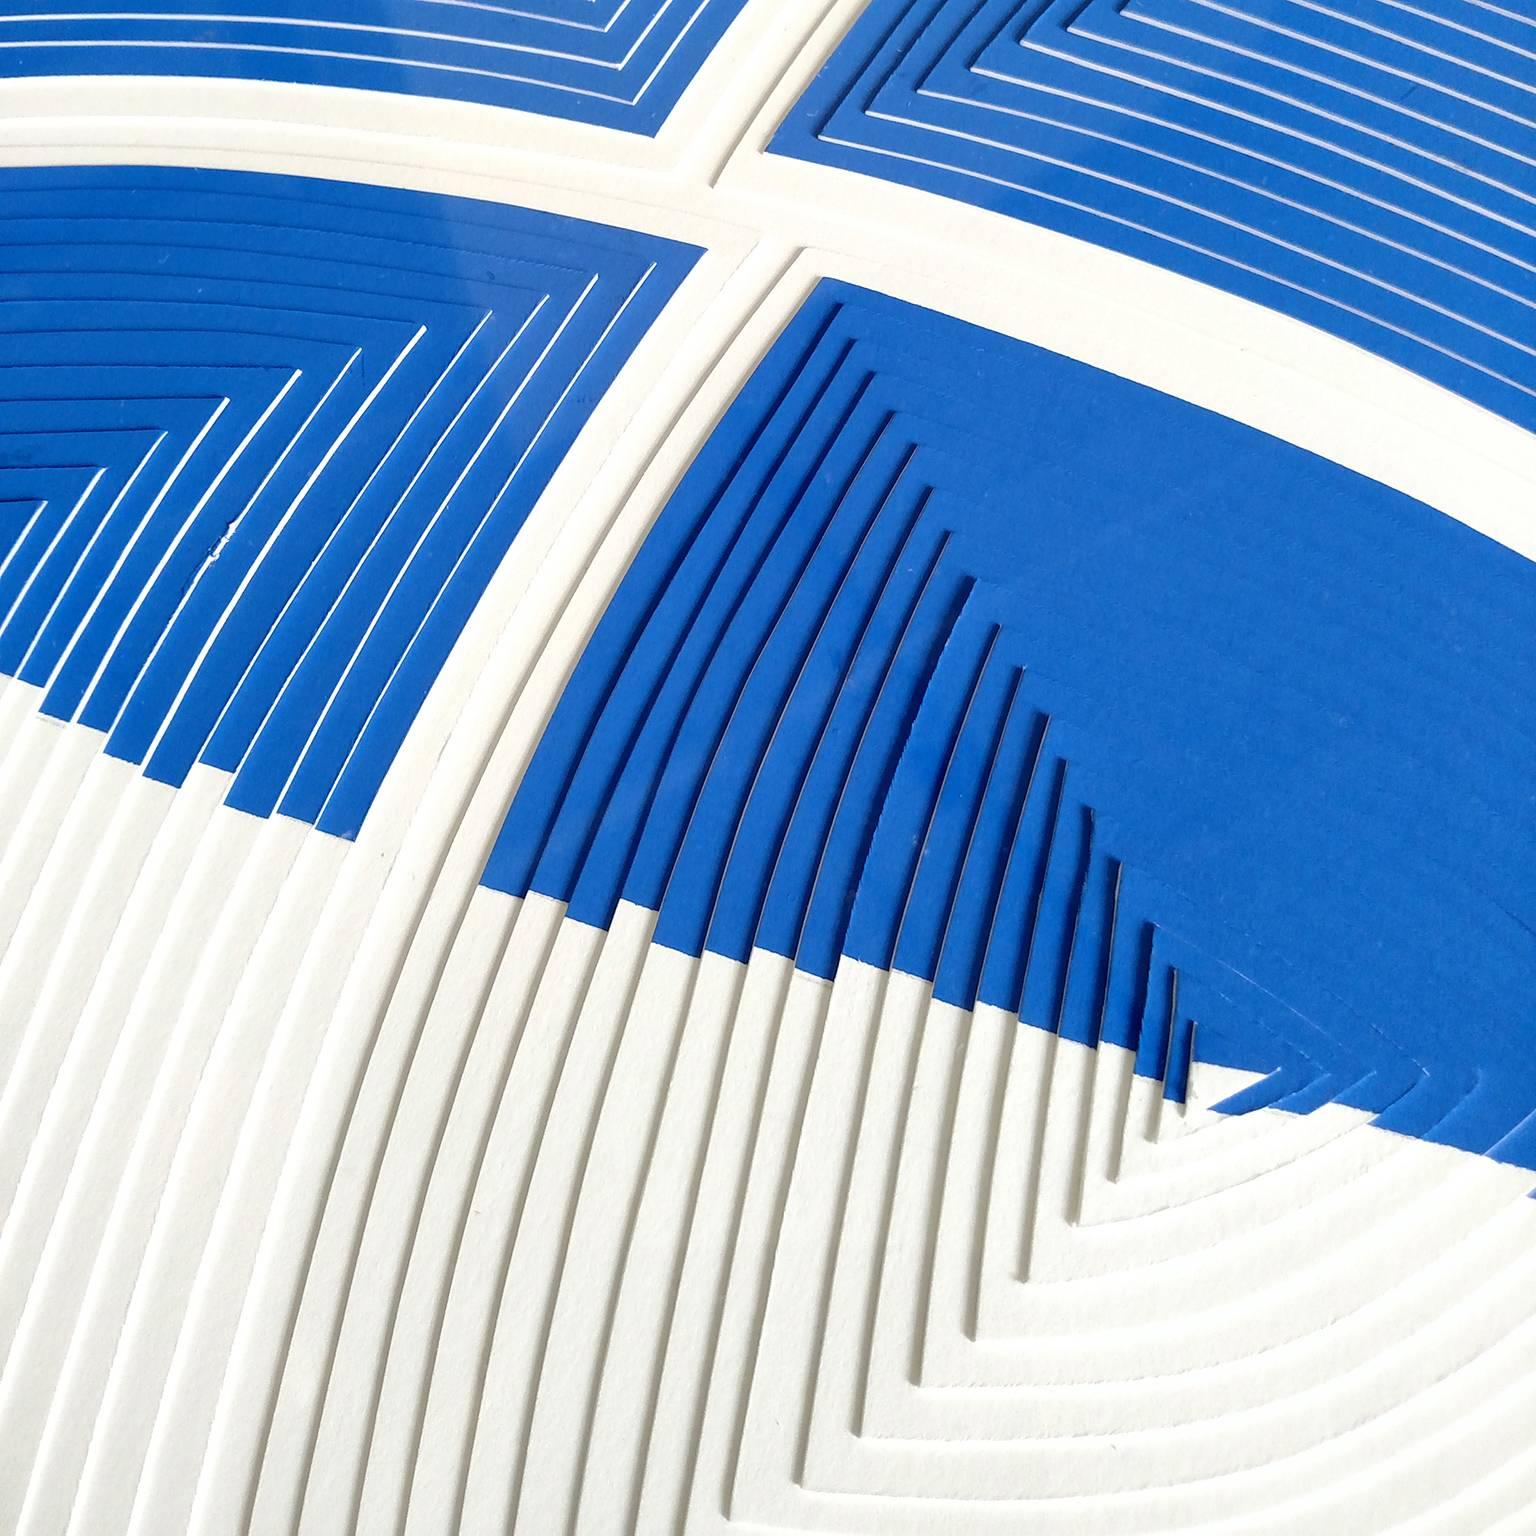 Cut Work – Blue & White Stripe - Out - Contemporary Mixed Media Art by Elizabeth Gregory-Gruen